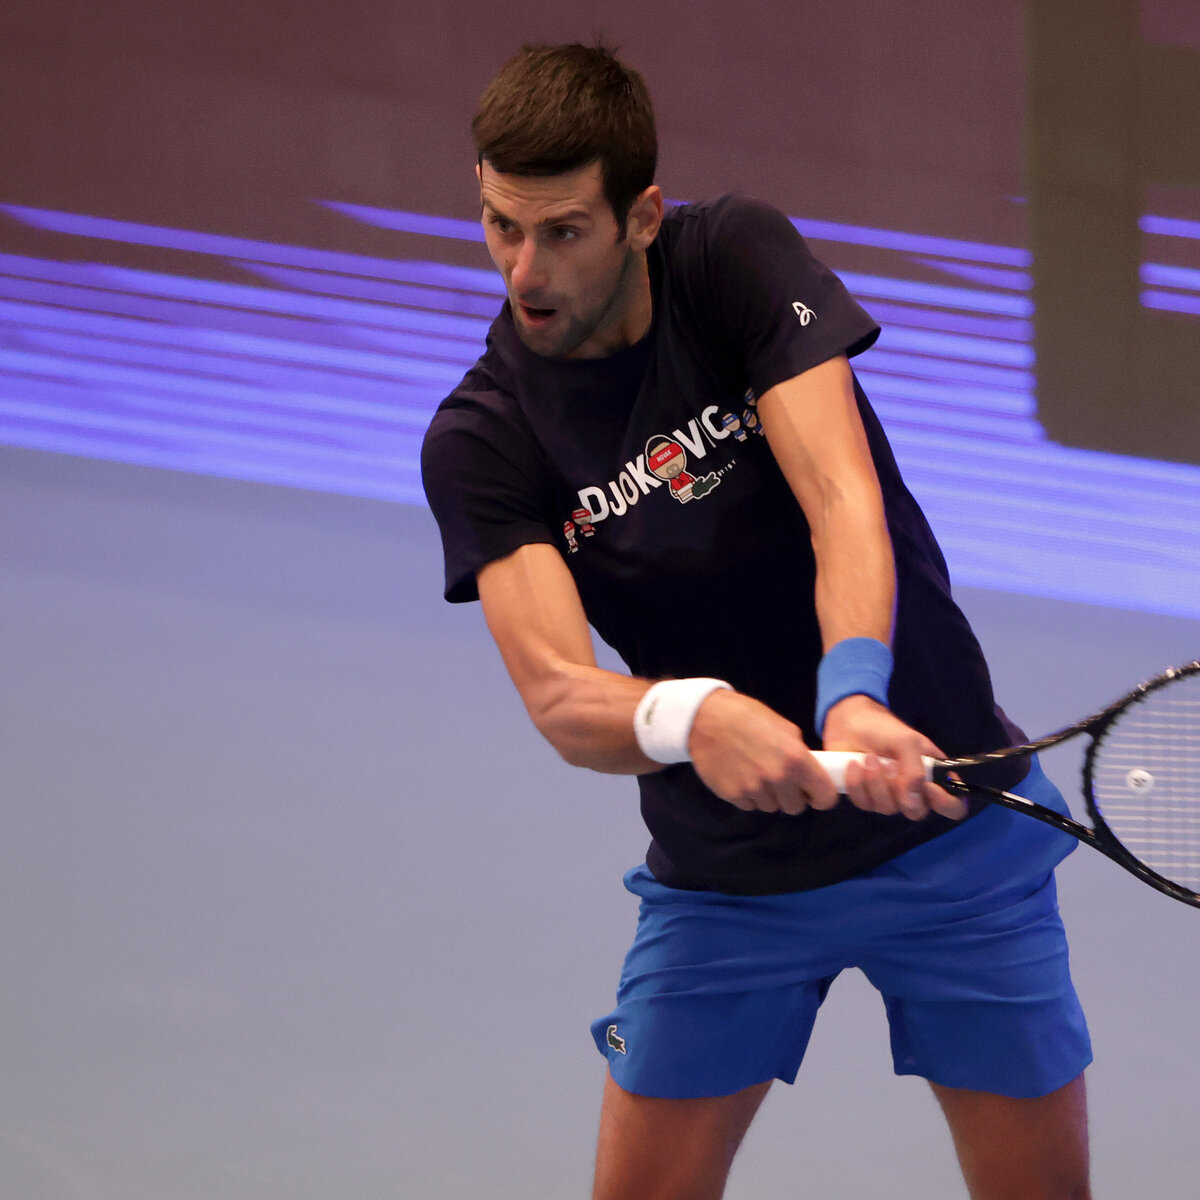 Erste Bank Open Novak Djokovic vs